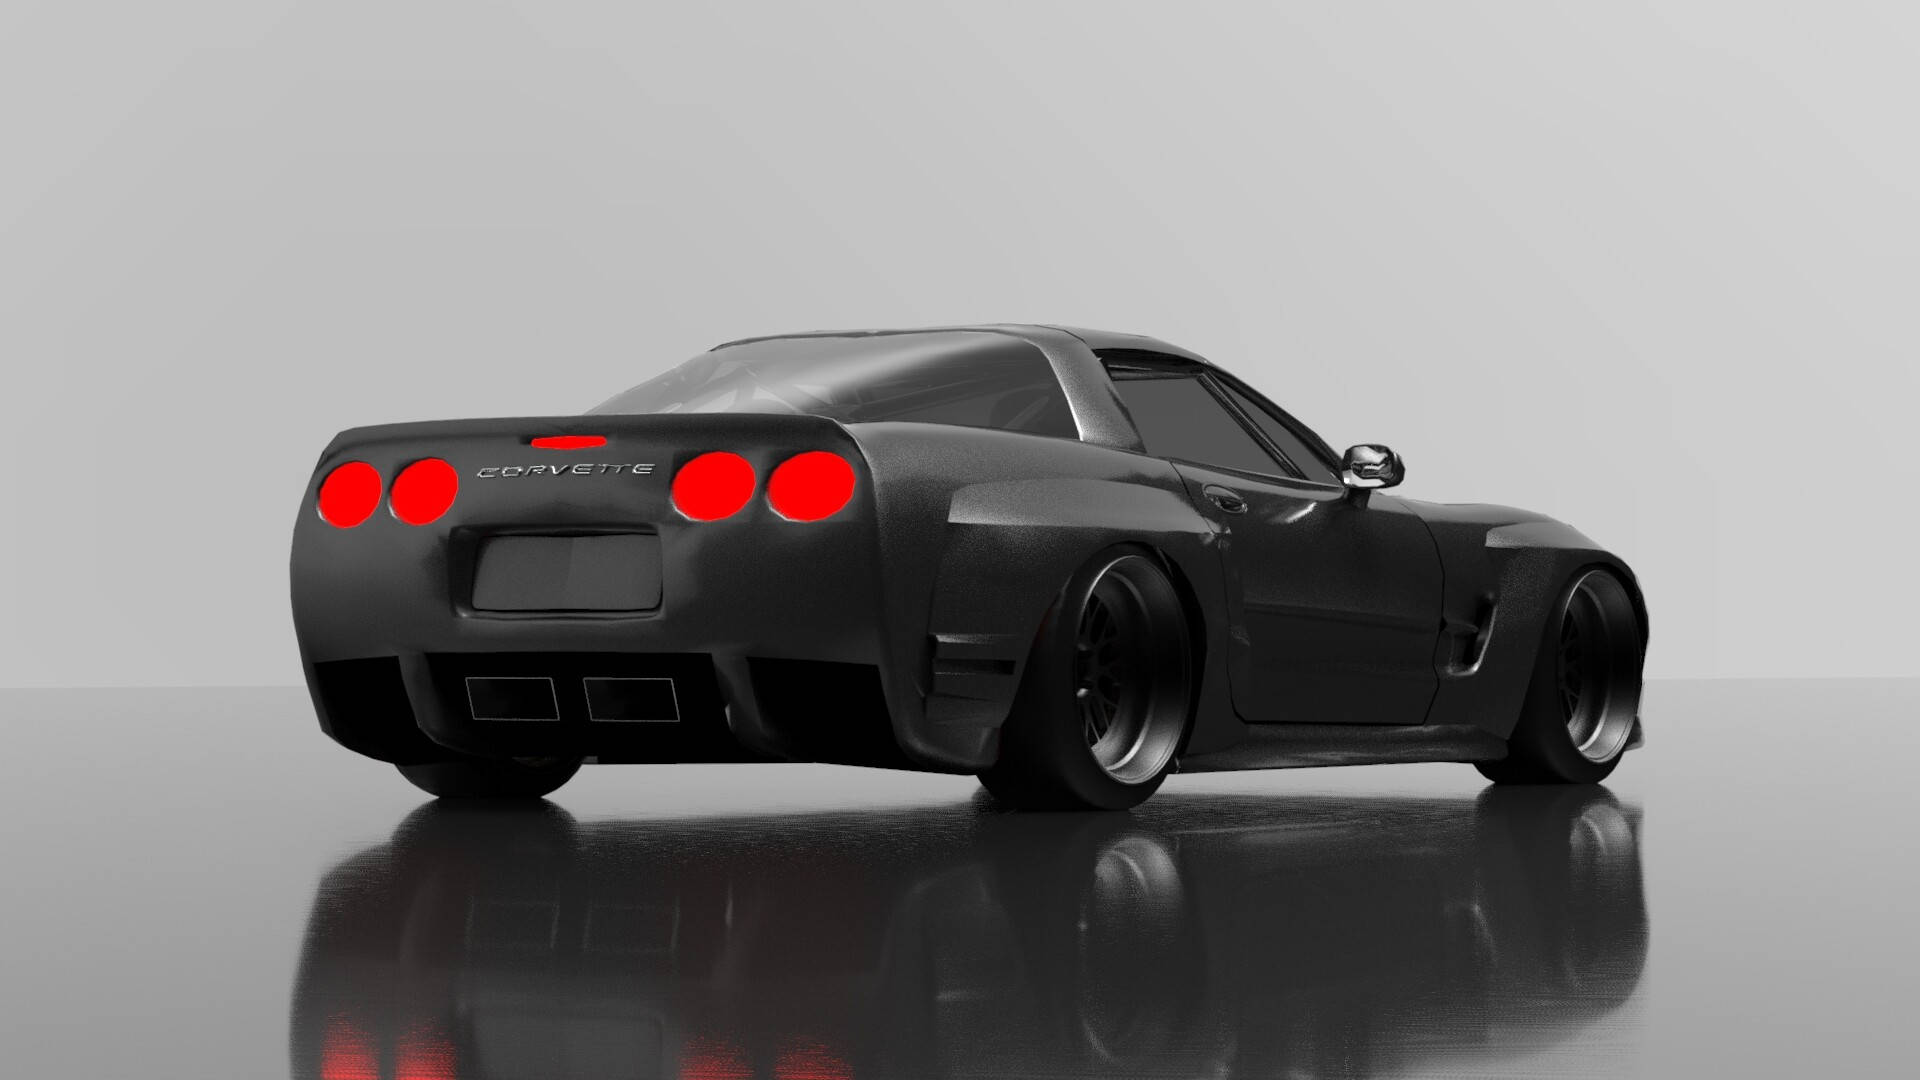 Sophistication and Power - The Black C4 Corvette Wallpaper